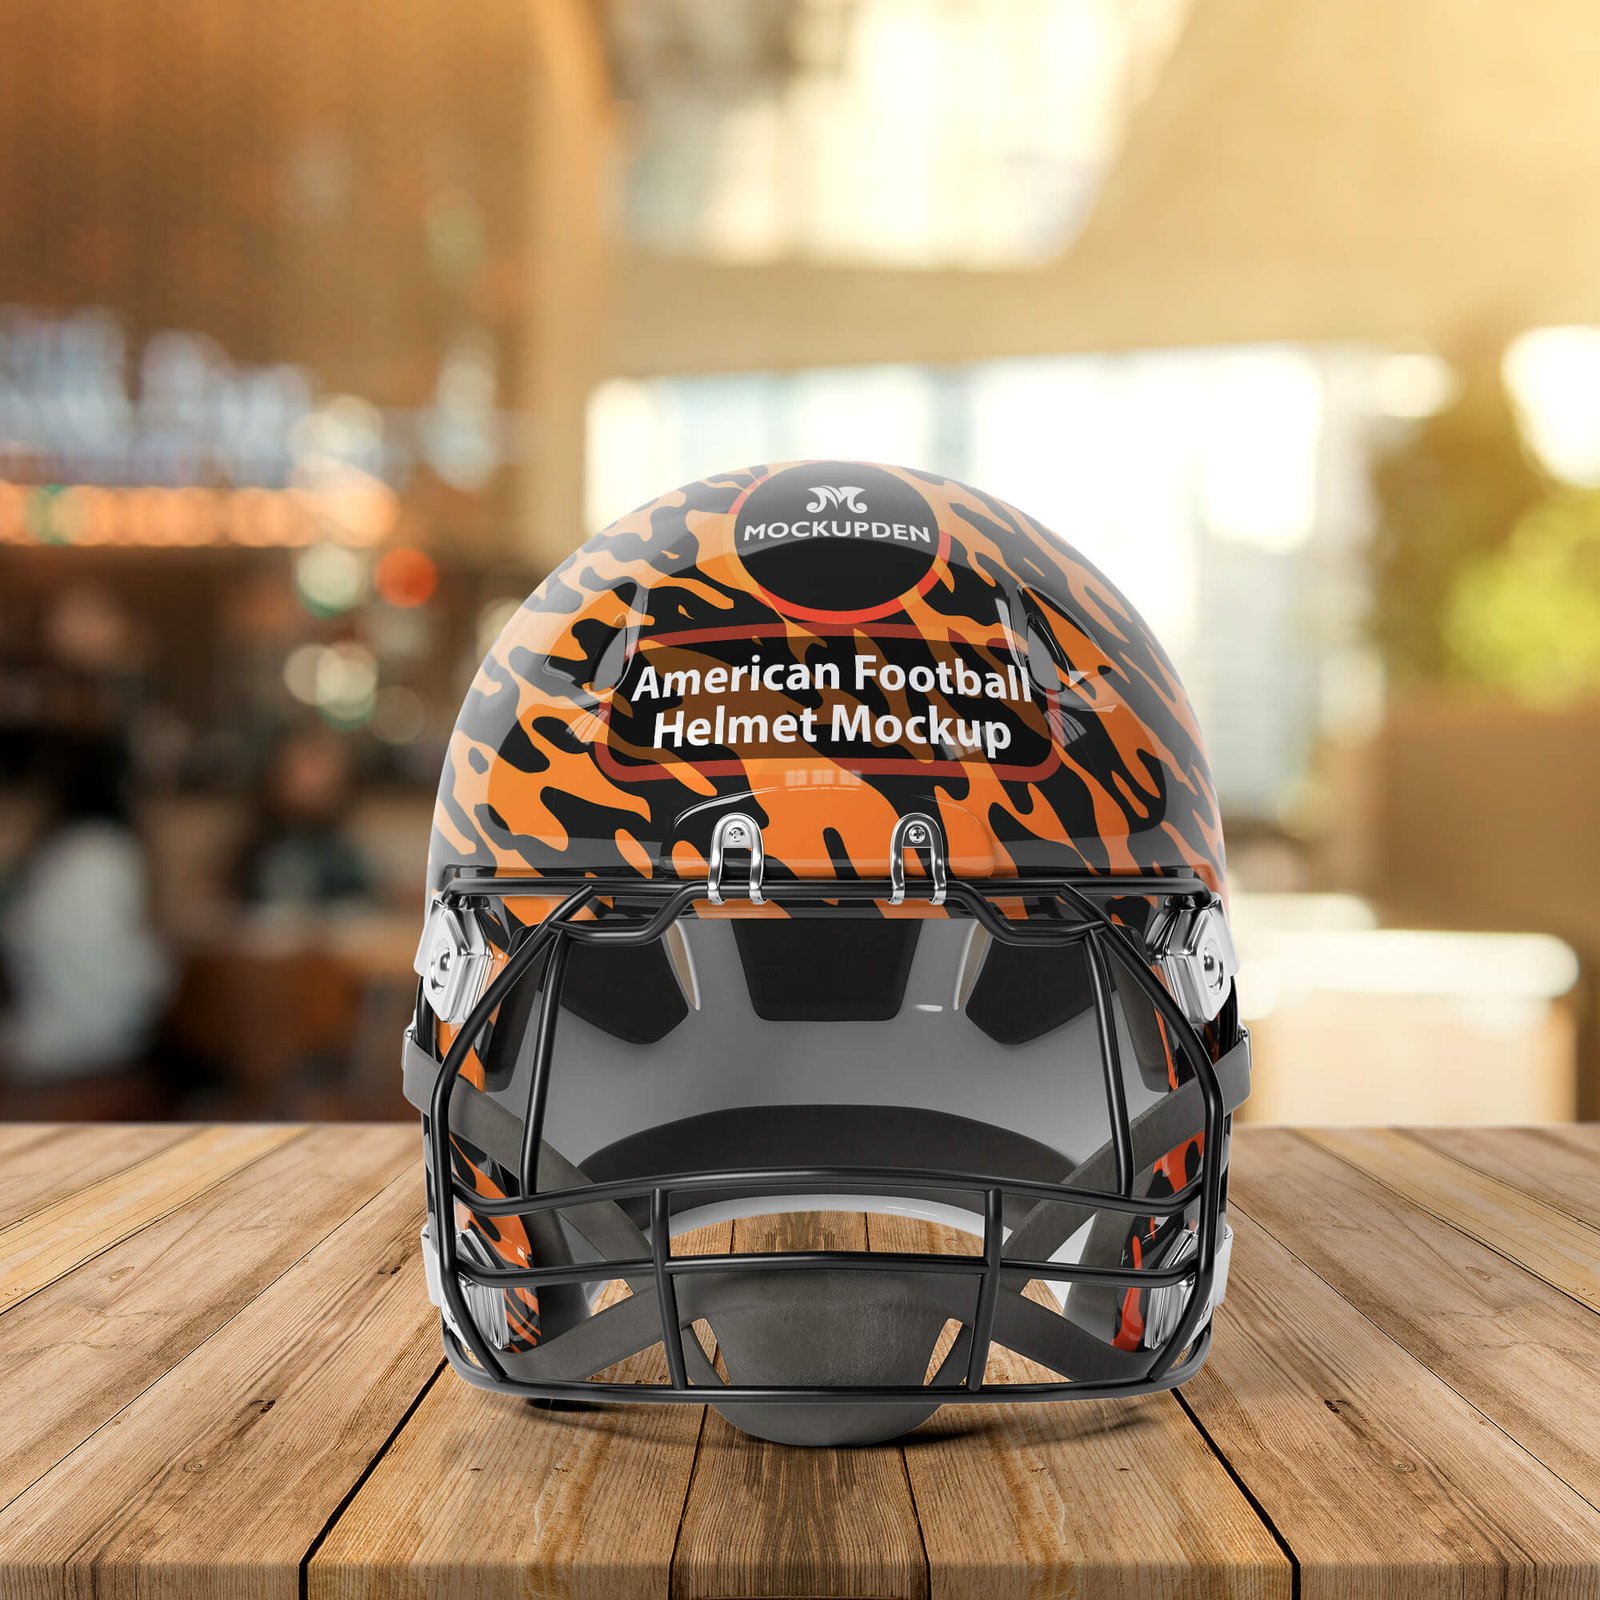 Free American Football Helmet Mockup PSD Template